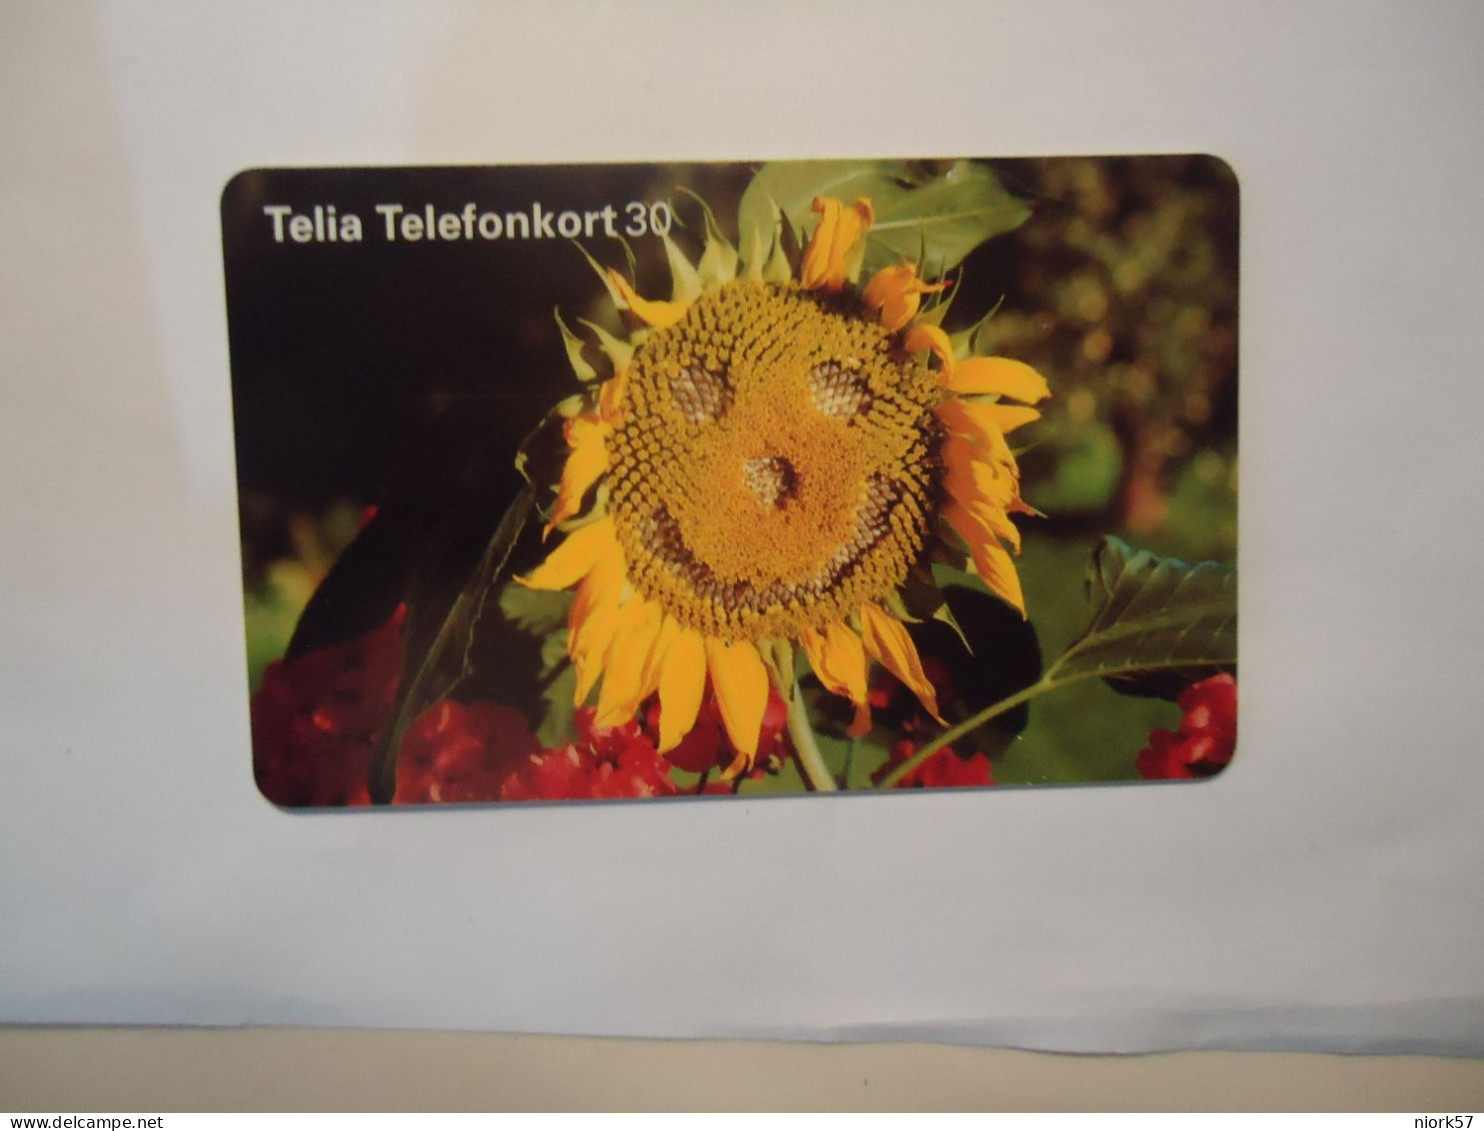 SWEDEN  USED  CARDS  FLOWERS PLANTS - Fleurs